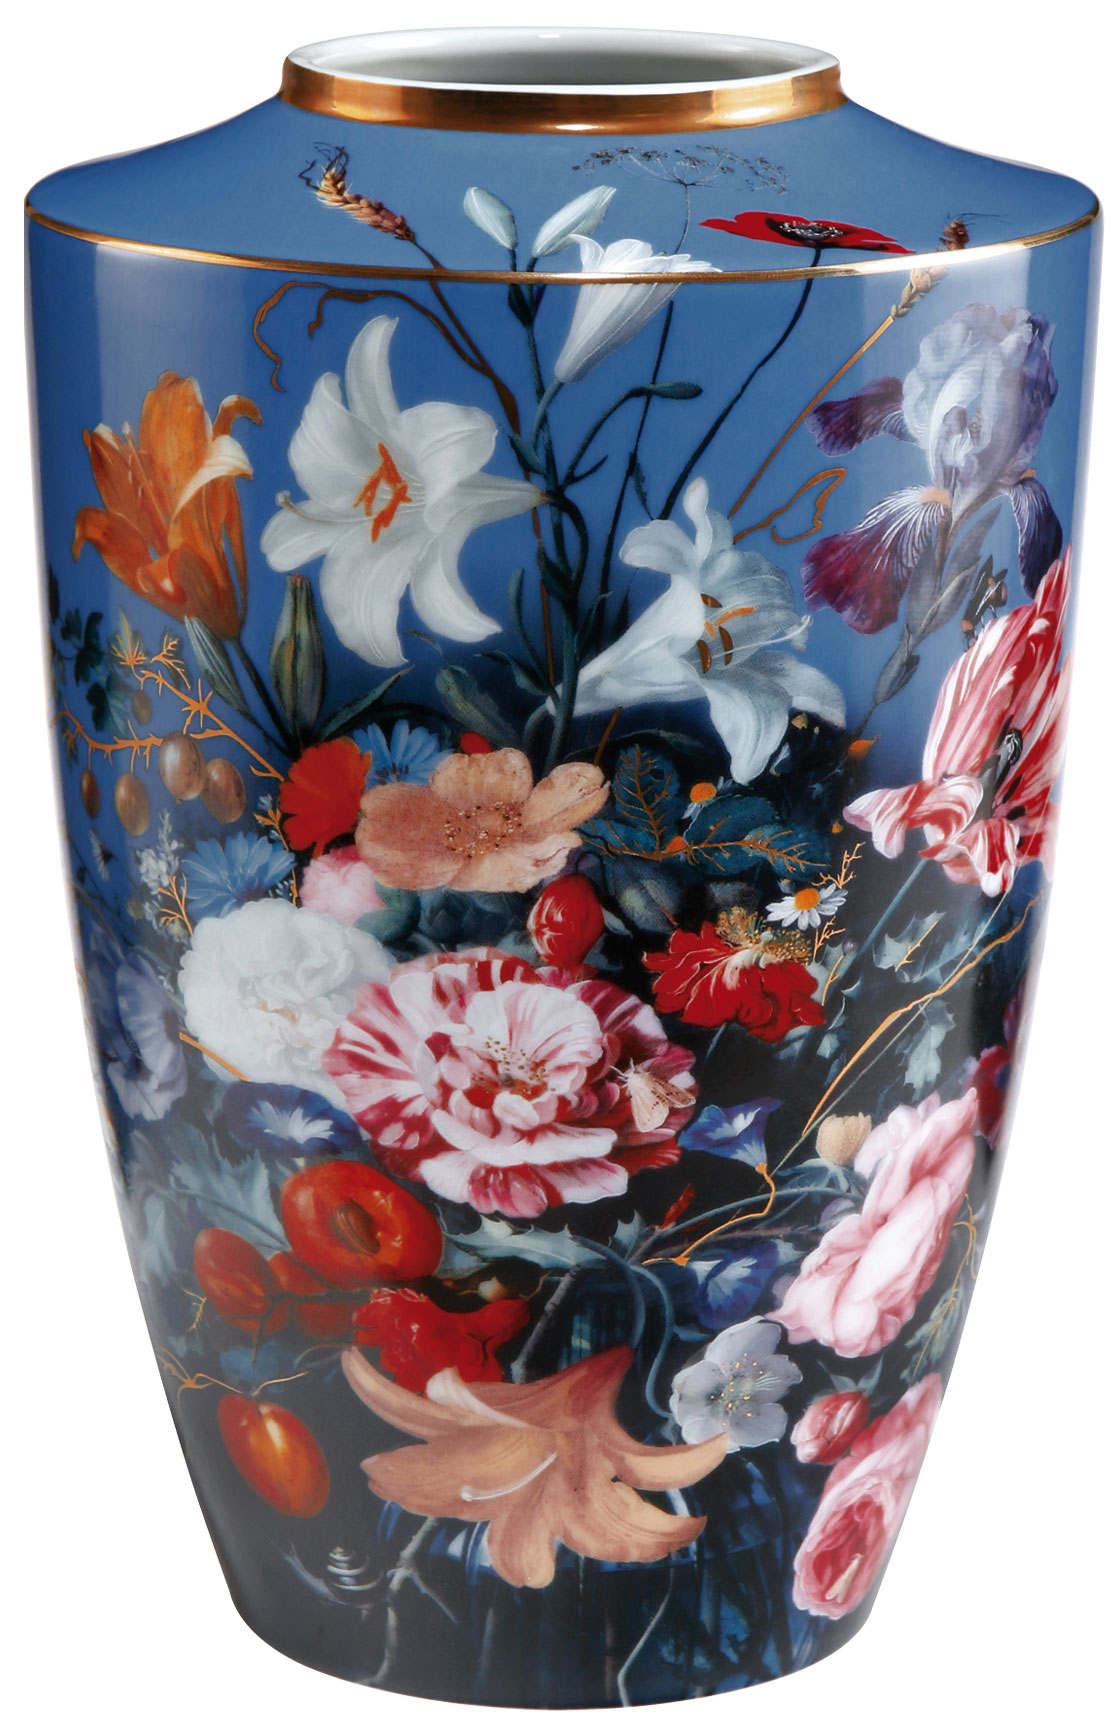 Porcelain vase "Summer Flowers" by Jan Davidsz de Heem